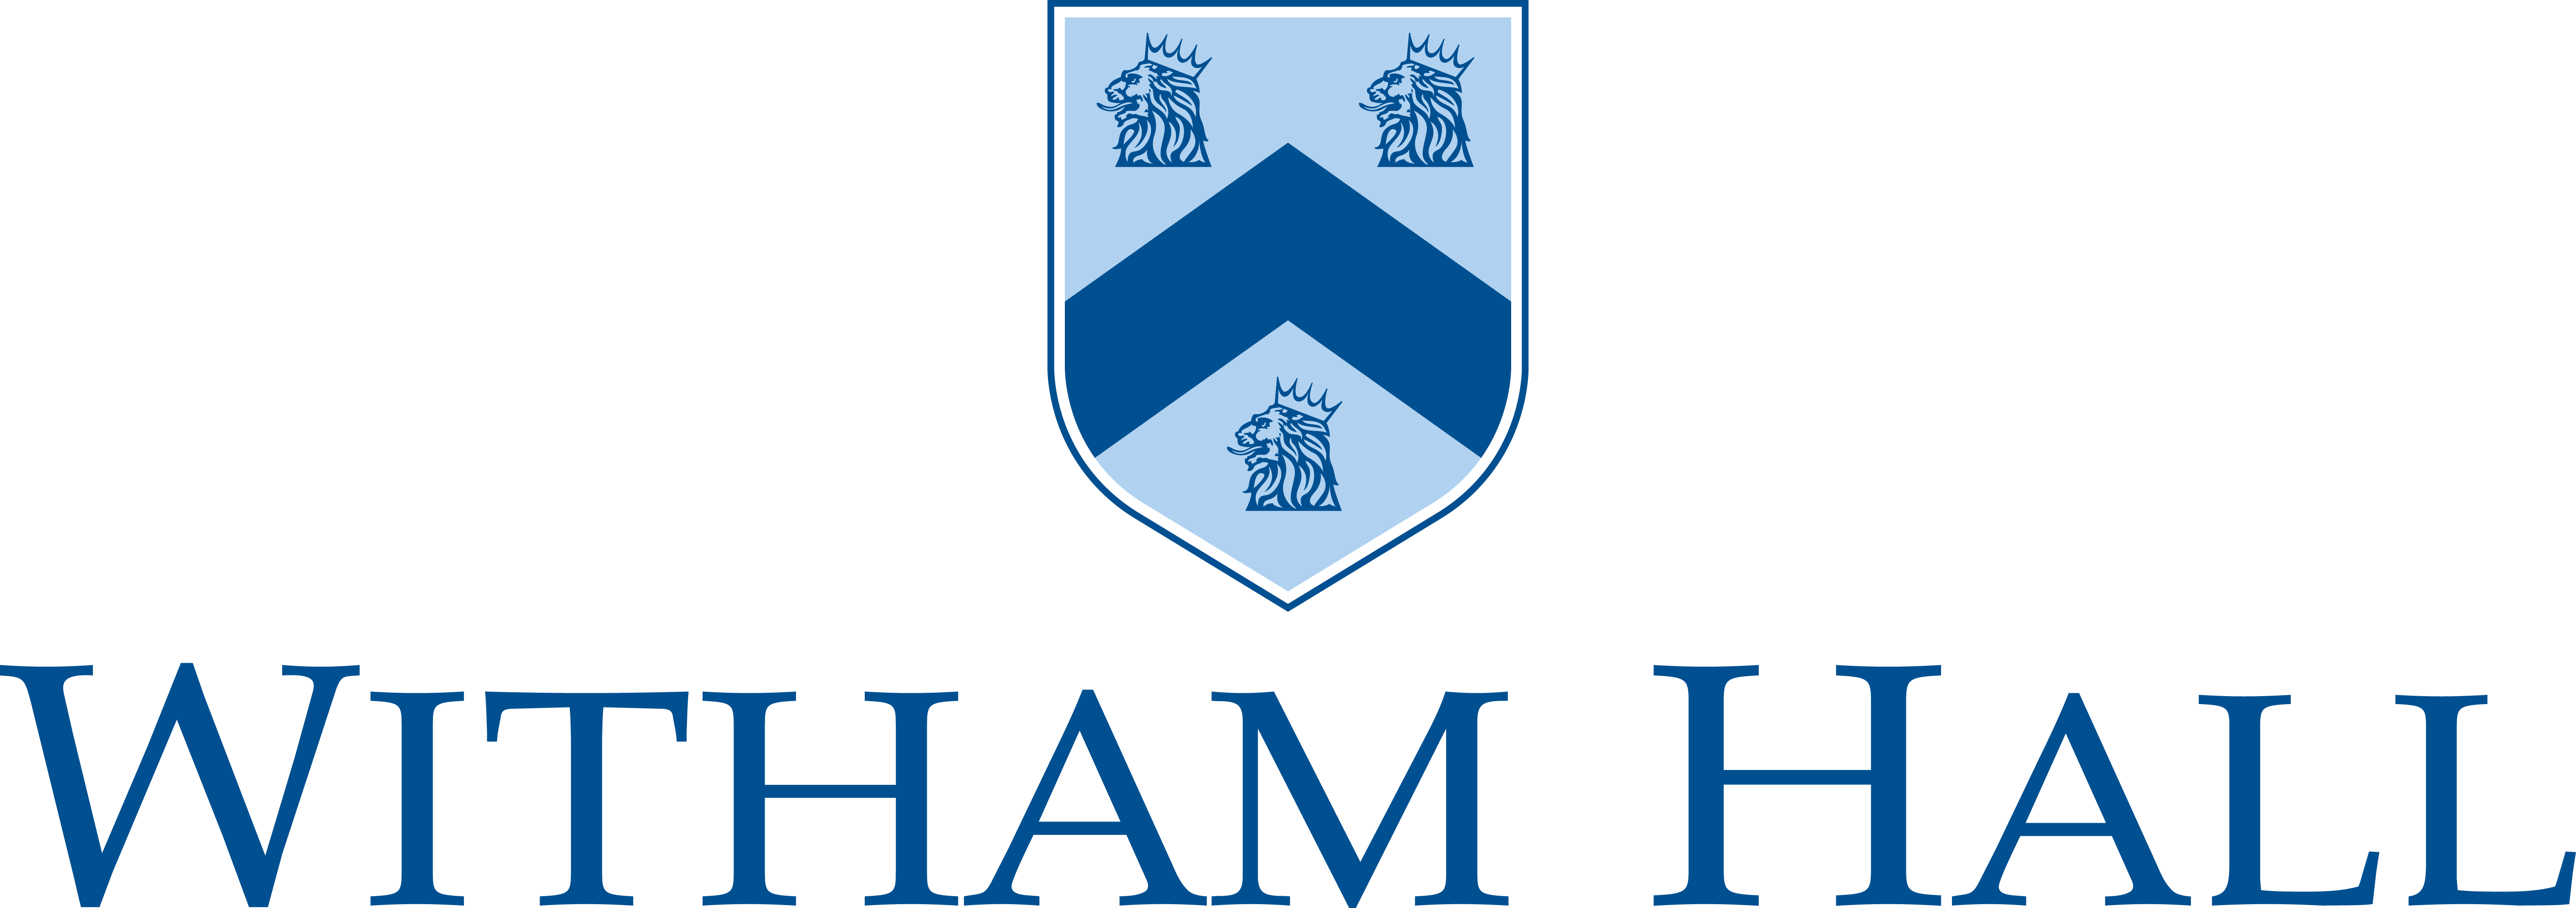 Witham Hall School Logo